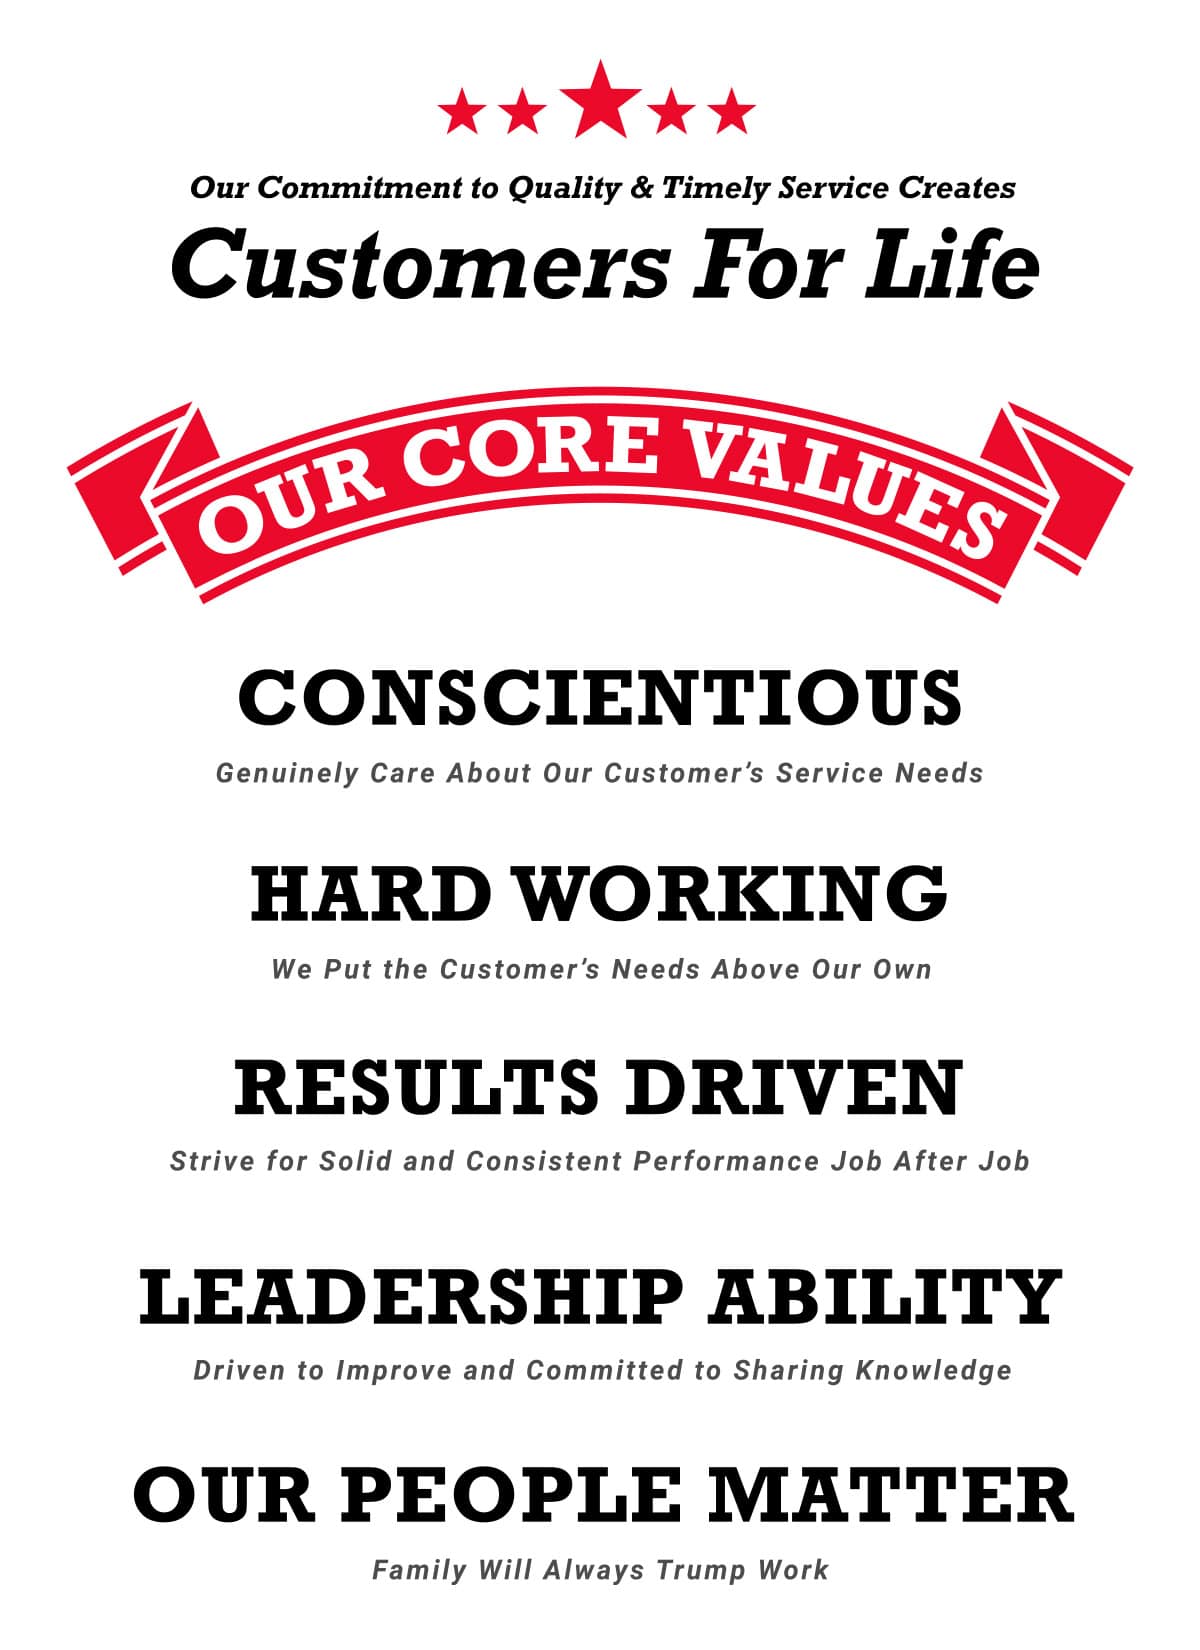 overhead door company's core values